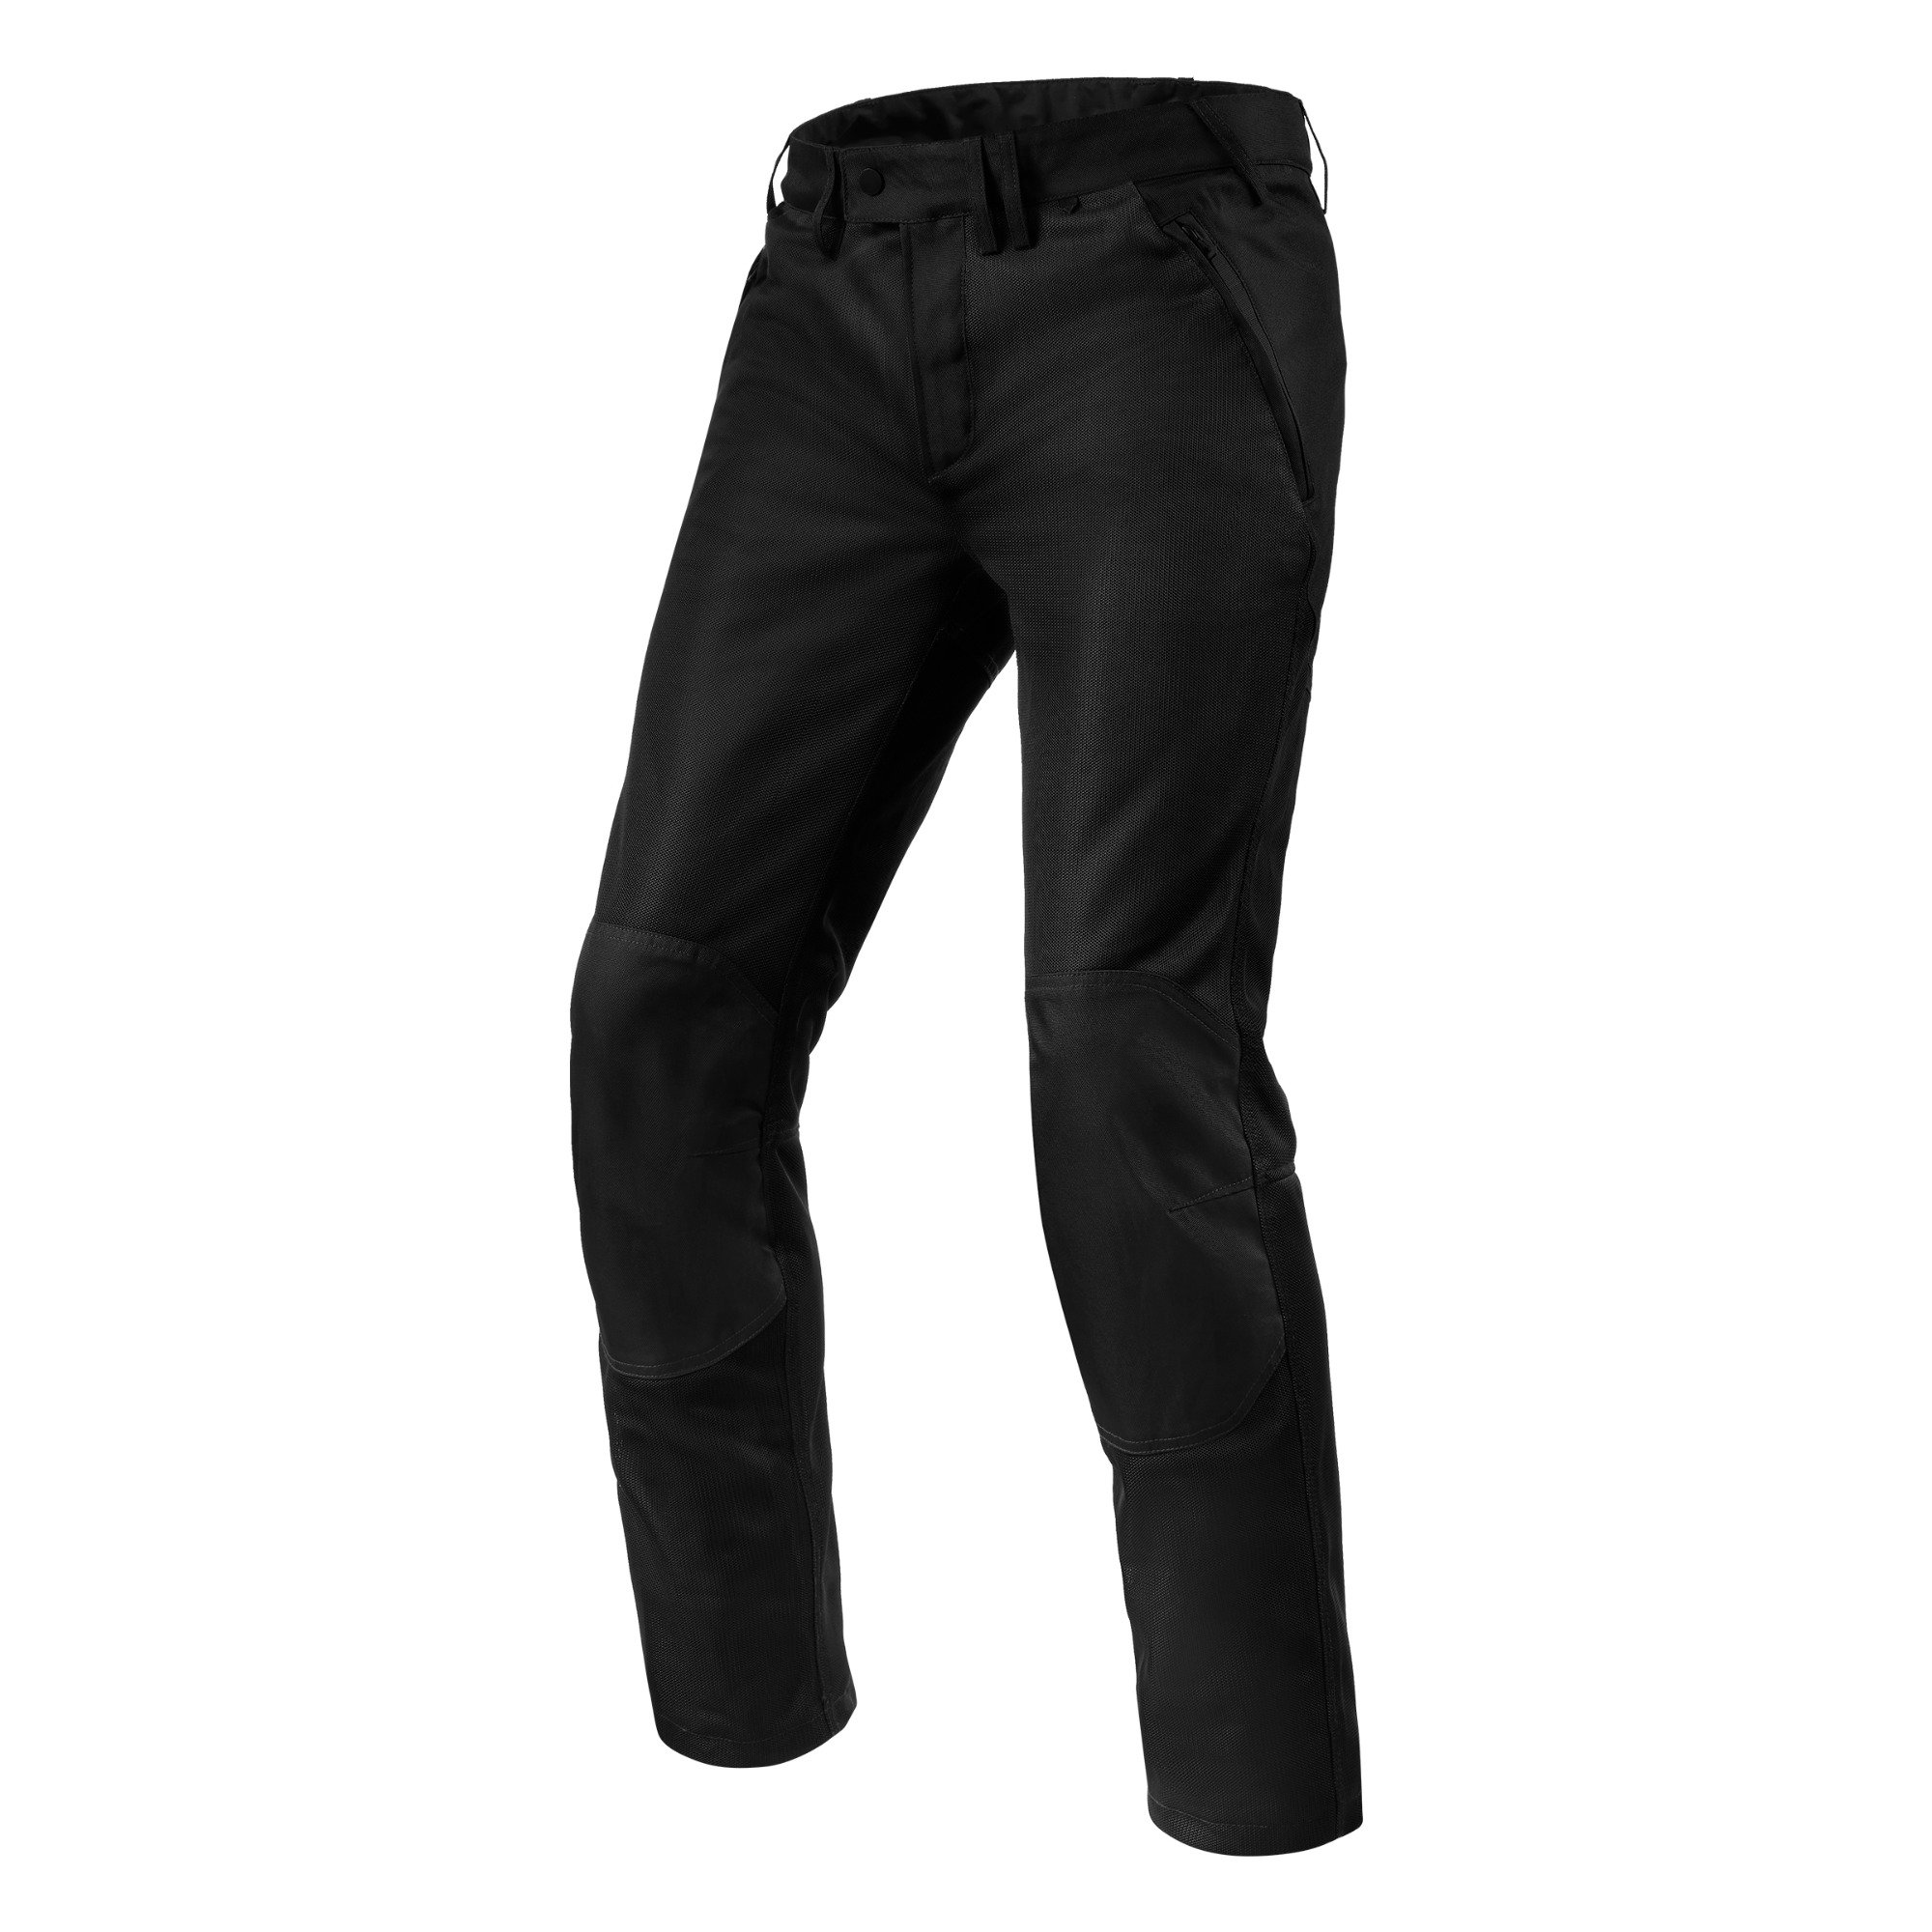 Image of REV'IT! Pants Eclipse 2 Black Long Motorcycle Pants Talla M